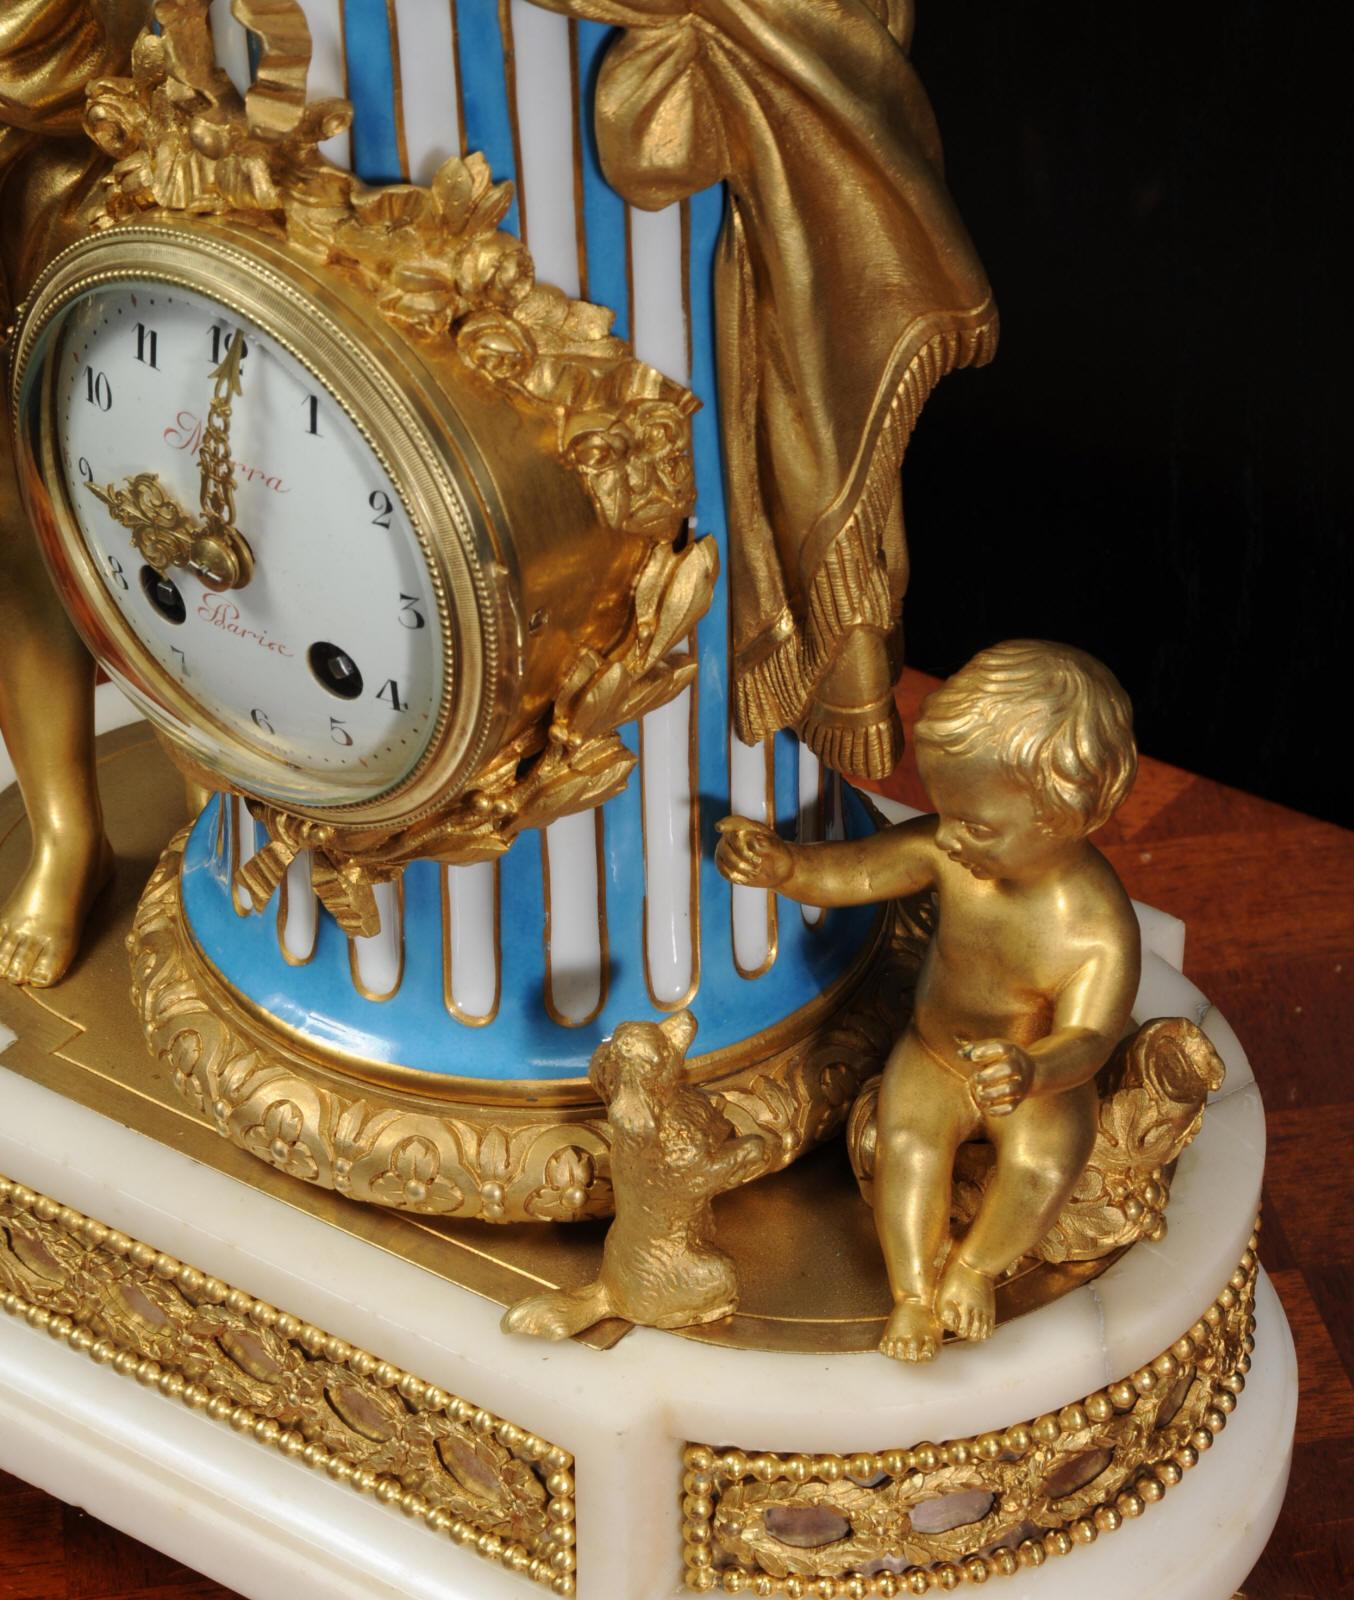 Louis XVI Venus, Putto and a Dog, Antique French Sèvres Porcelain and Ormolu Clock